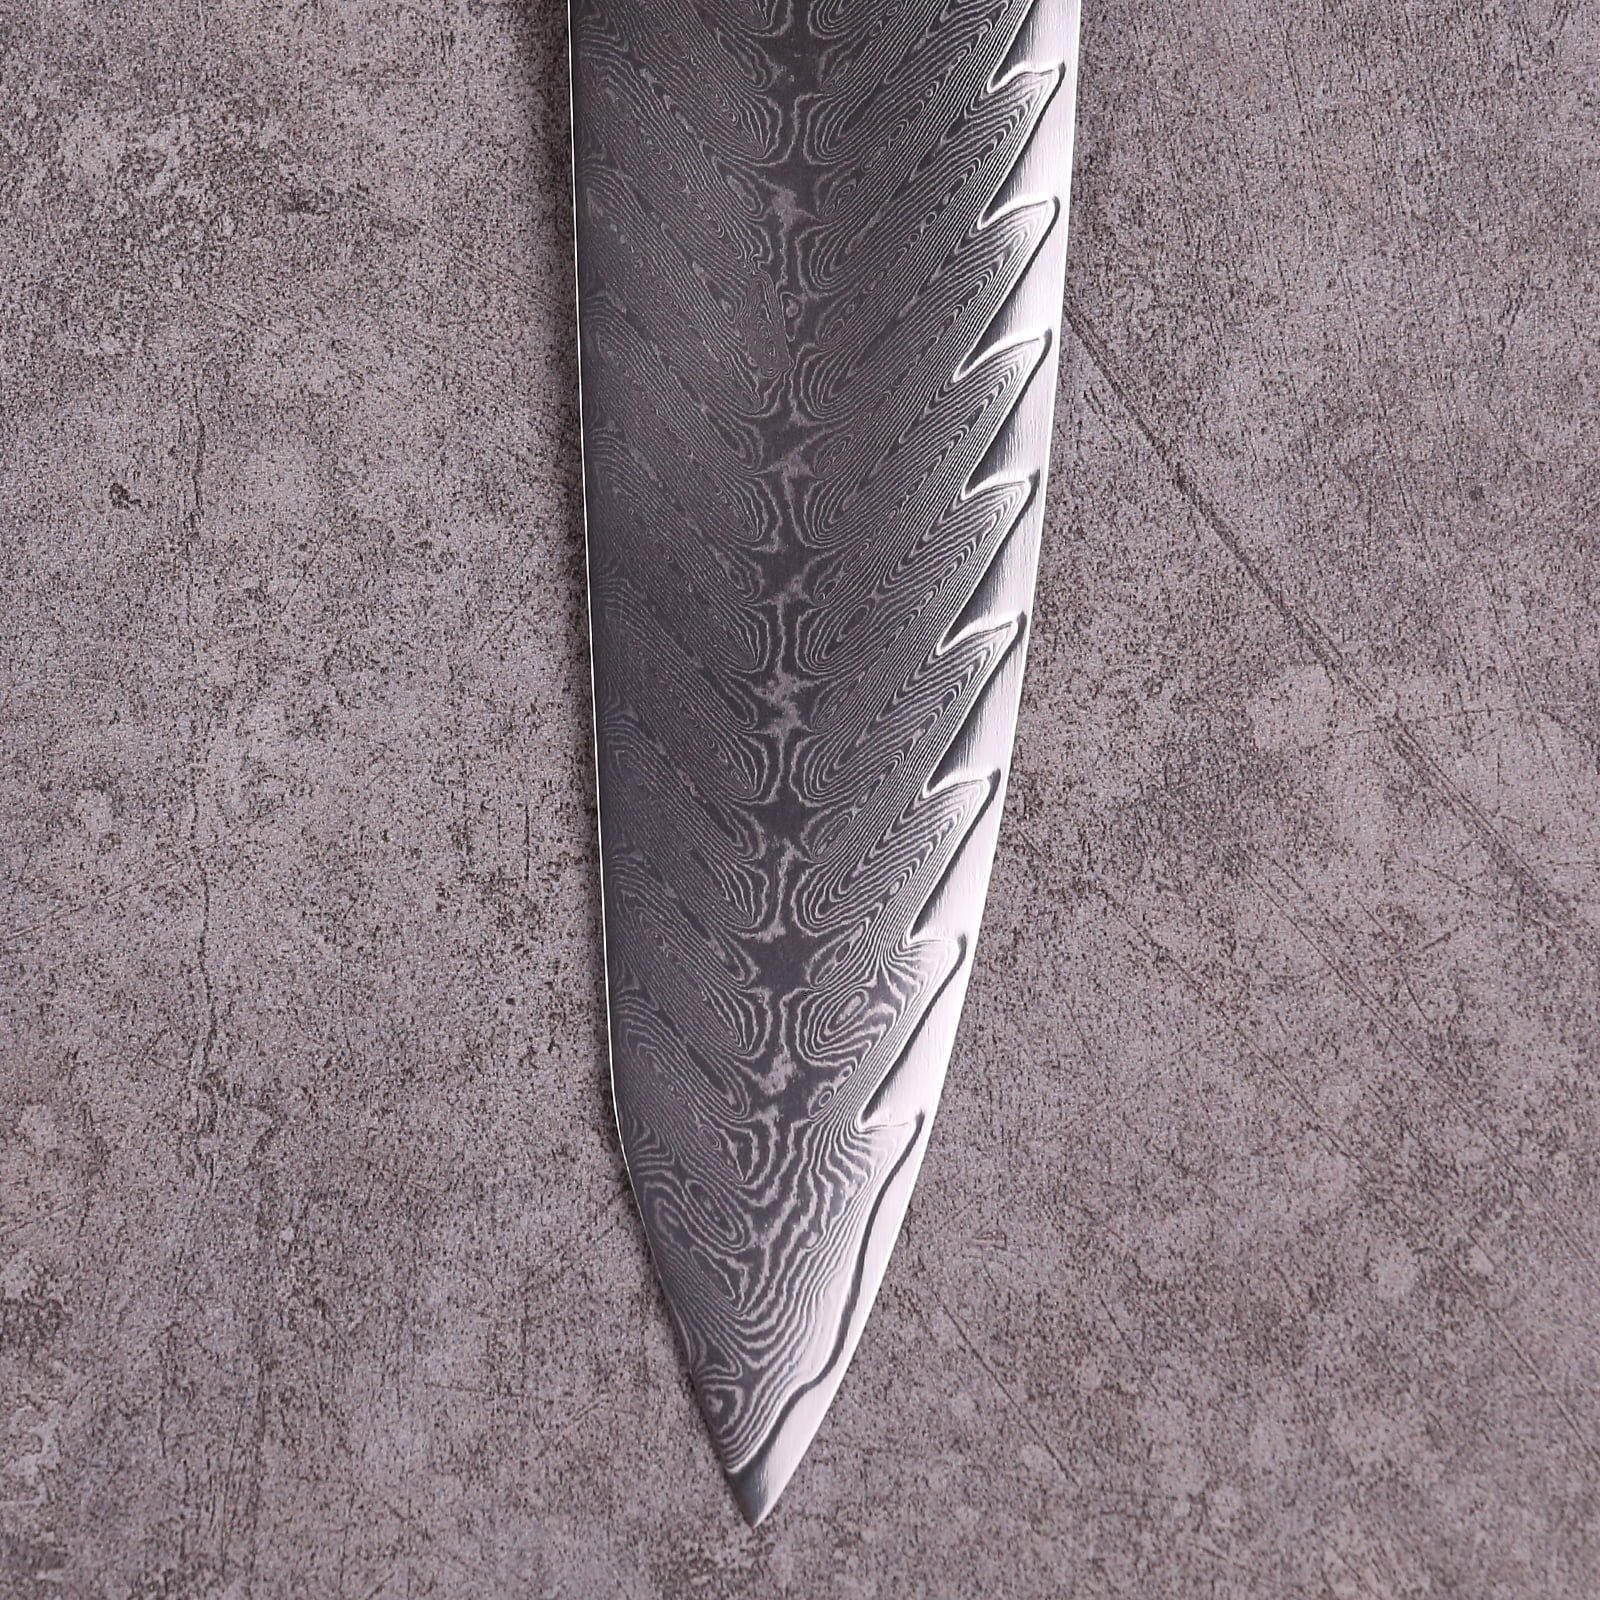 AUS-10 Steel Knife